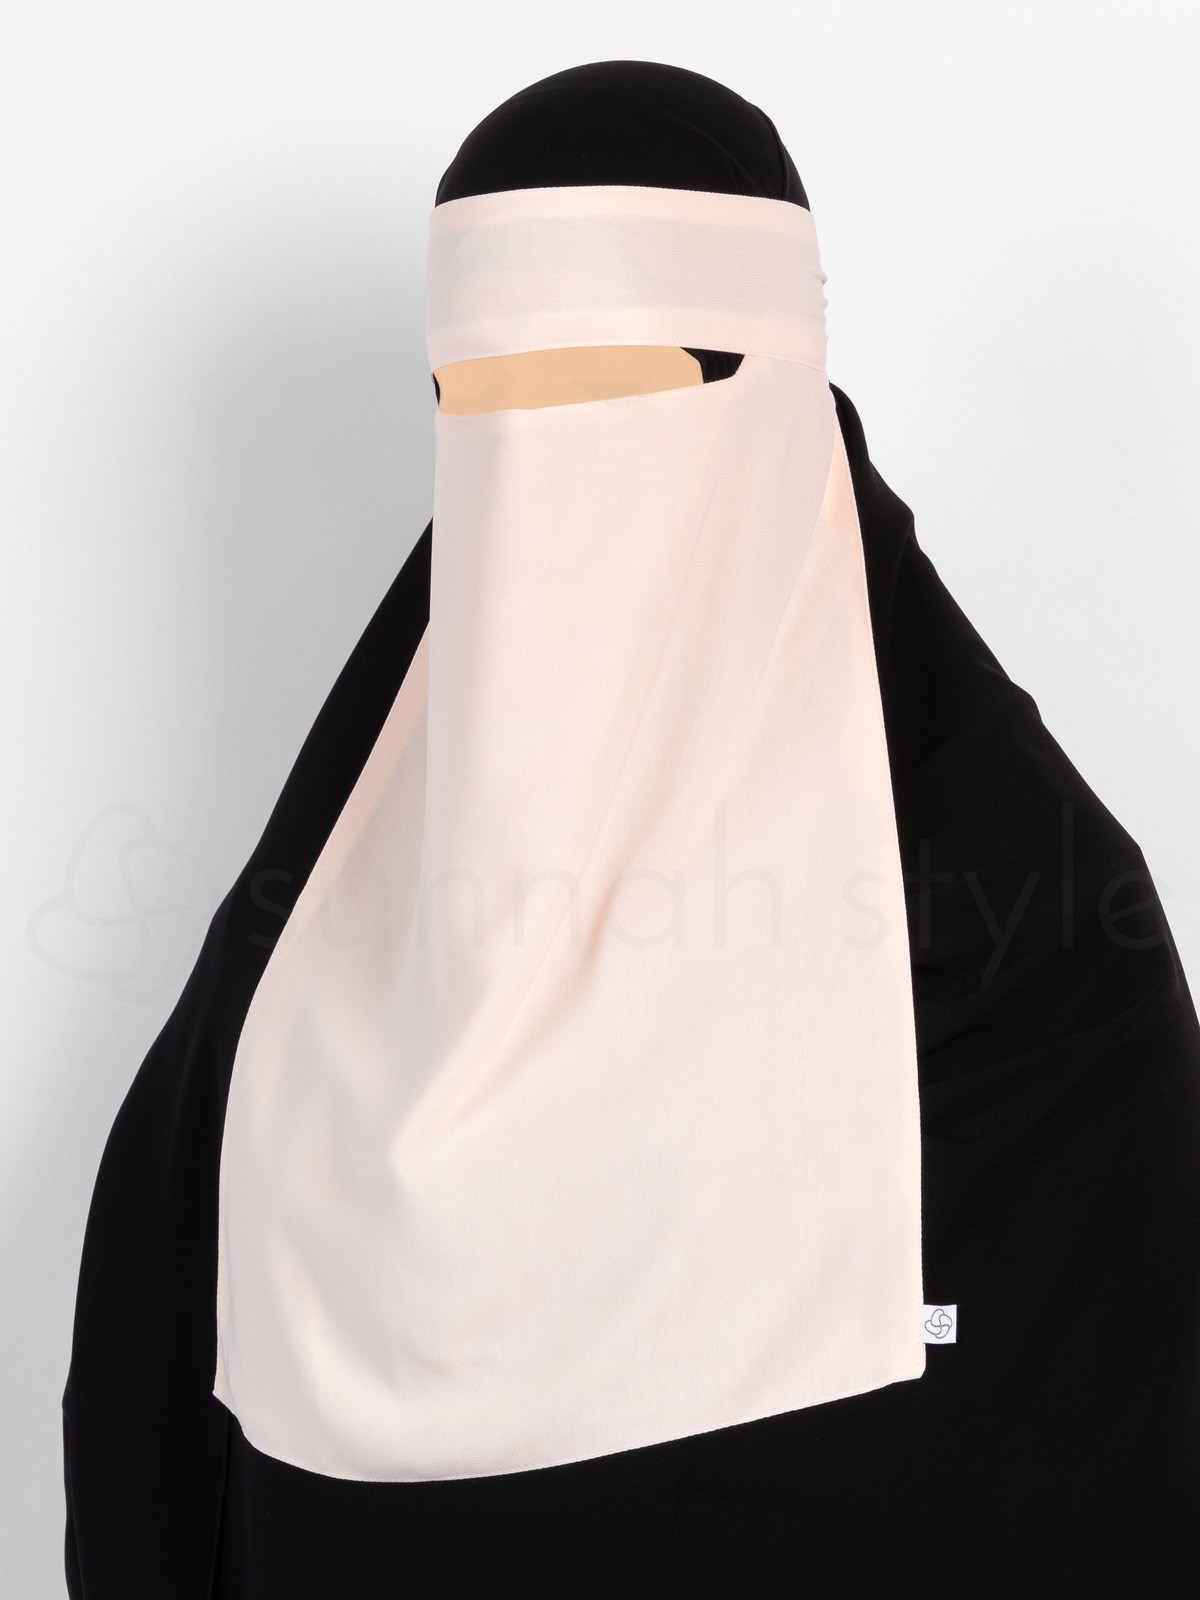 Sunnah Style - Narrow No-Pinch One Layer Niqab (Creamy Peach)